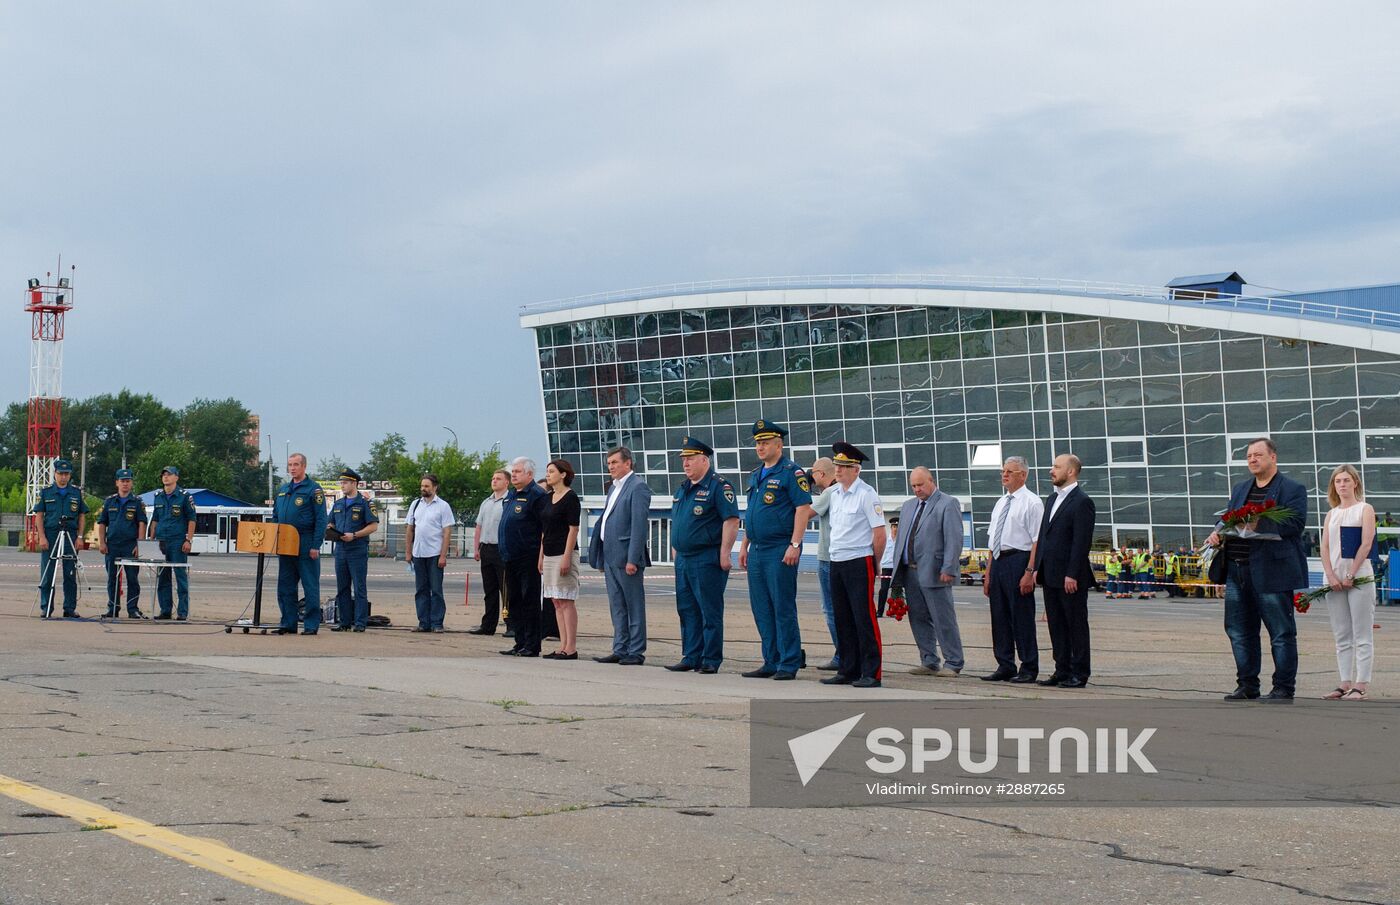 Last honors to Il-76 crew at Irkutsk Airport